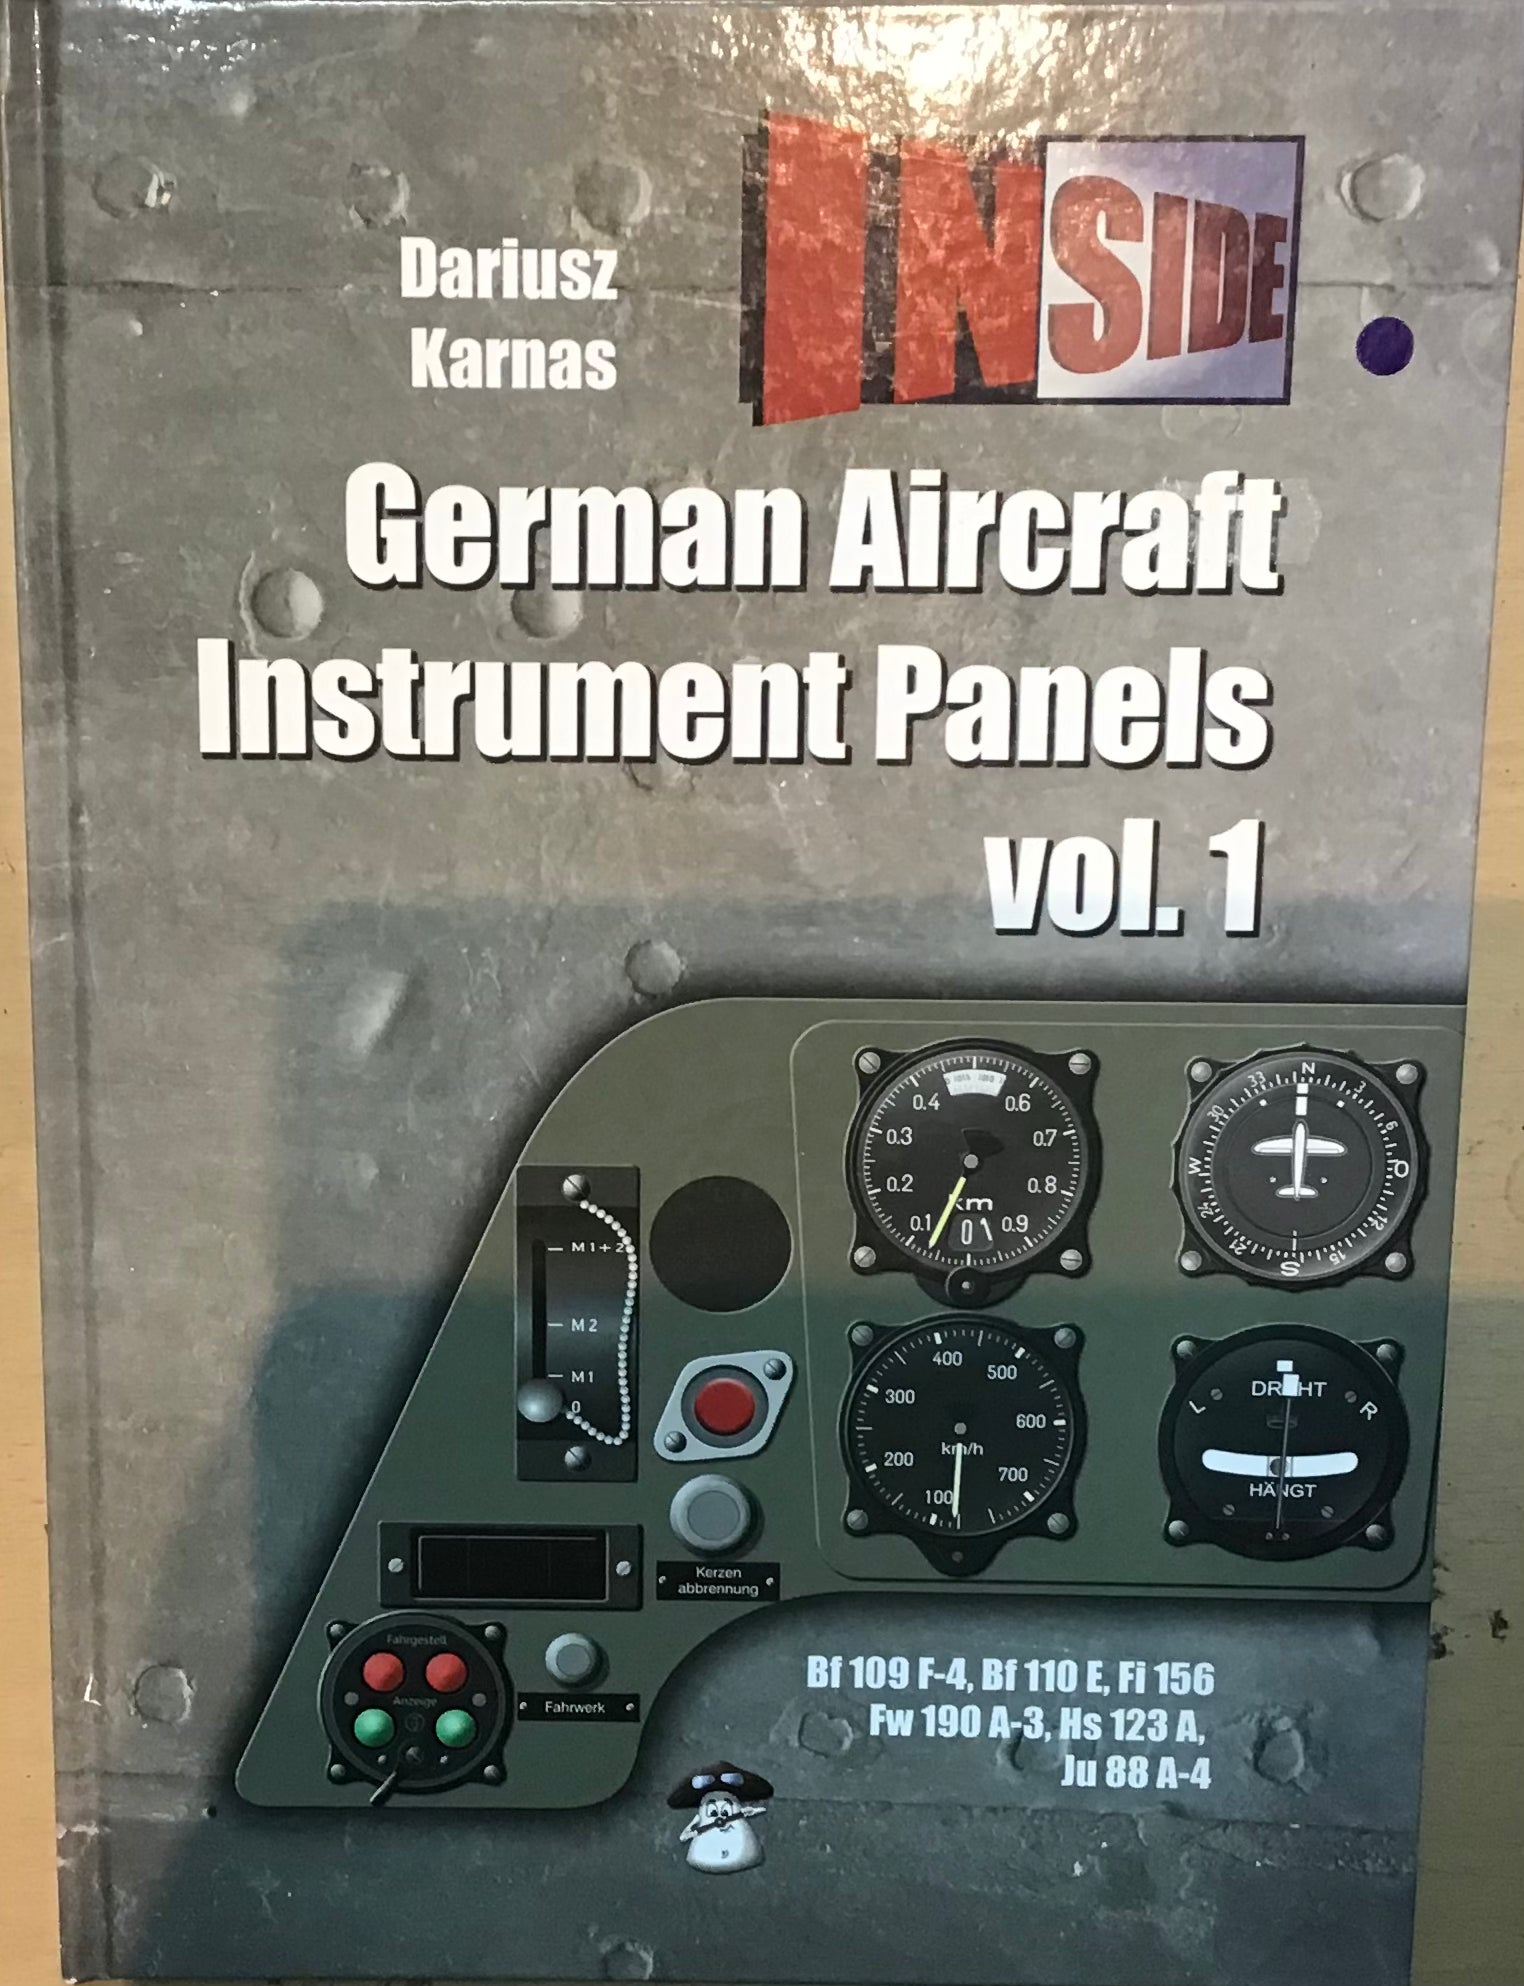 German Aircraft Instrument Panels Vol.1 by Dariusz Karnas - Chester Model Centre